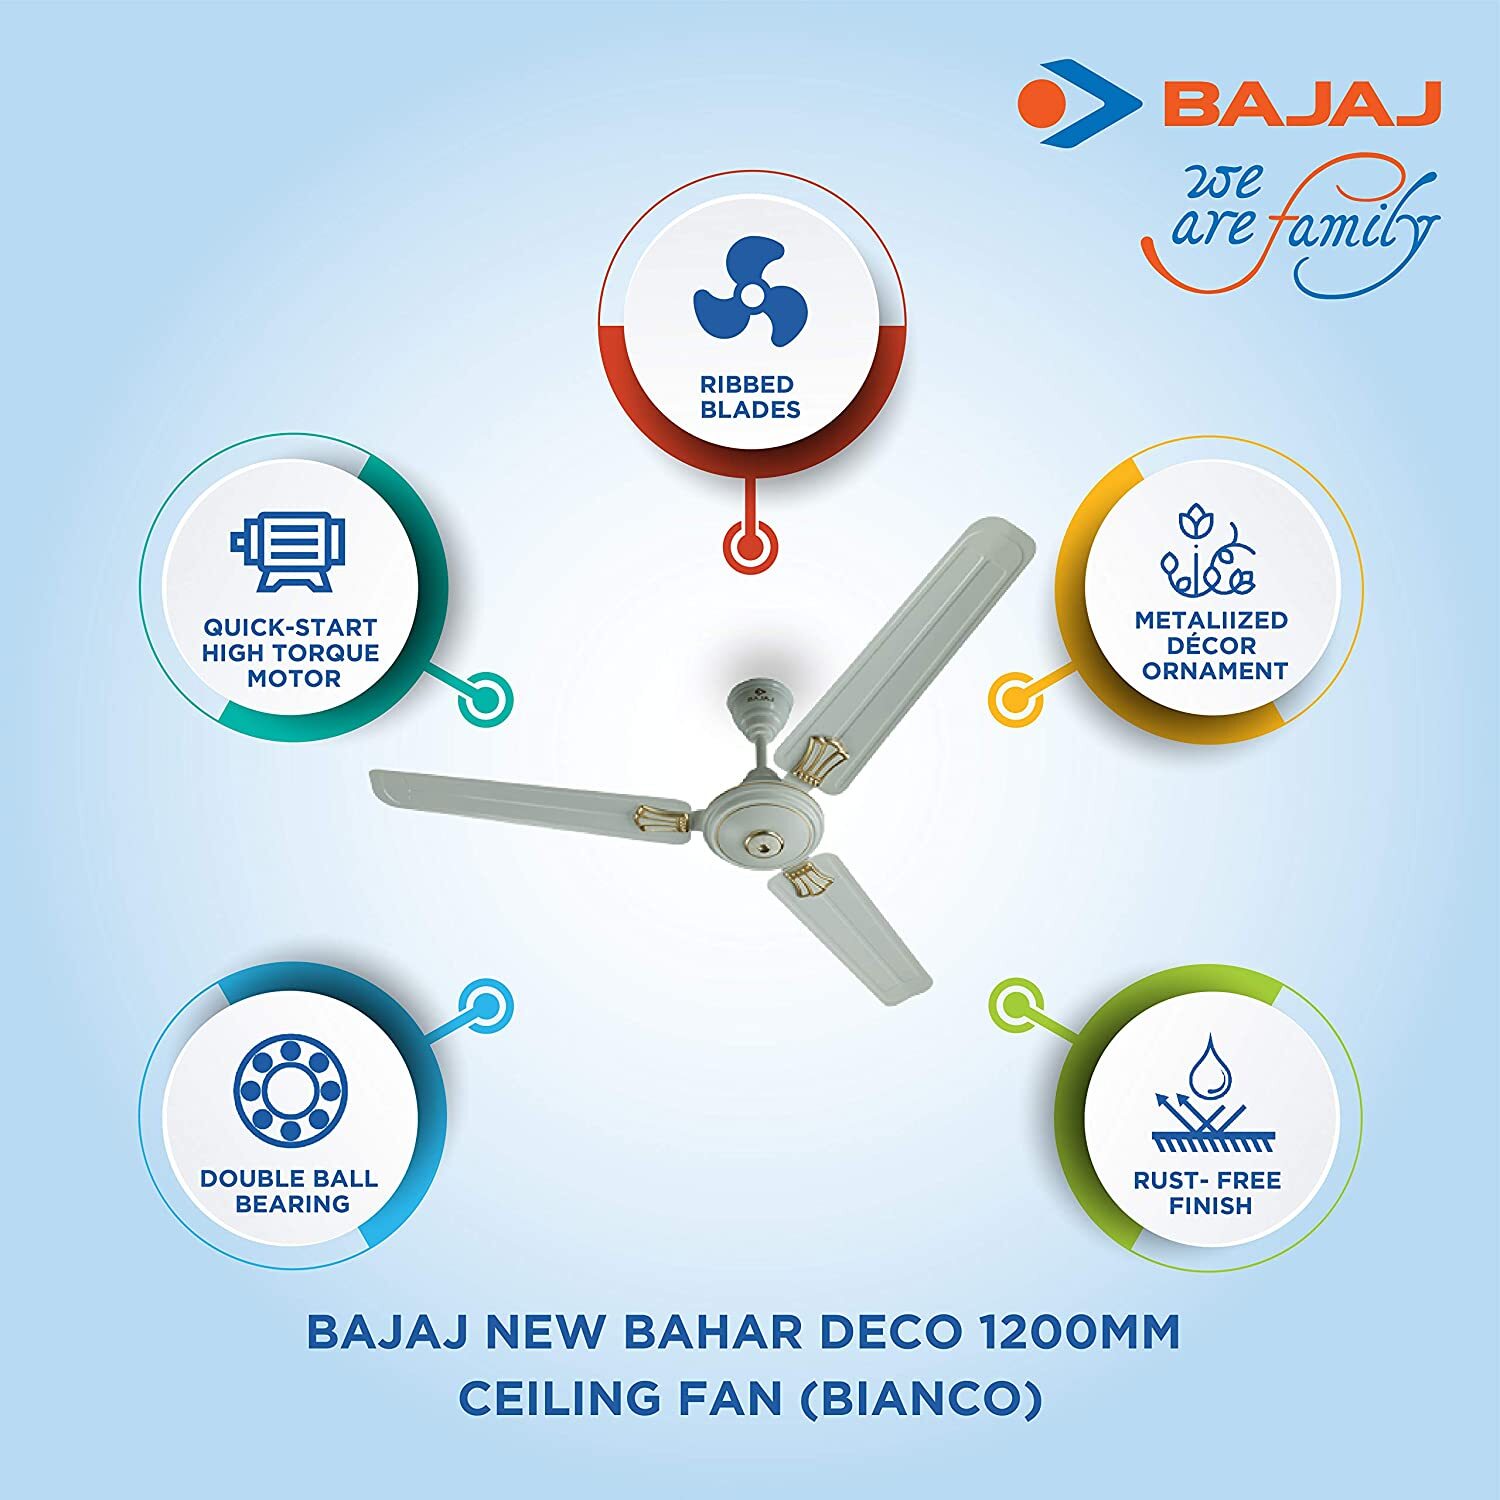 Bajaj New Bahar Deco 1200mm Ceiling Fan (Bianco)-M000000000397 www.mysocially.com